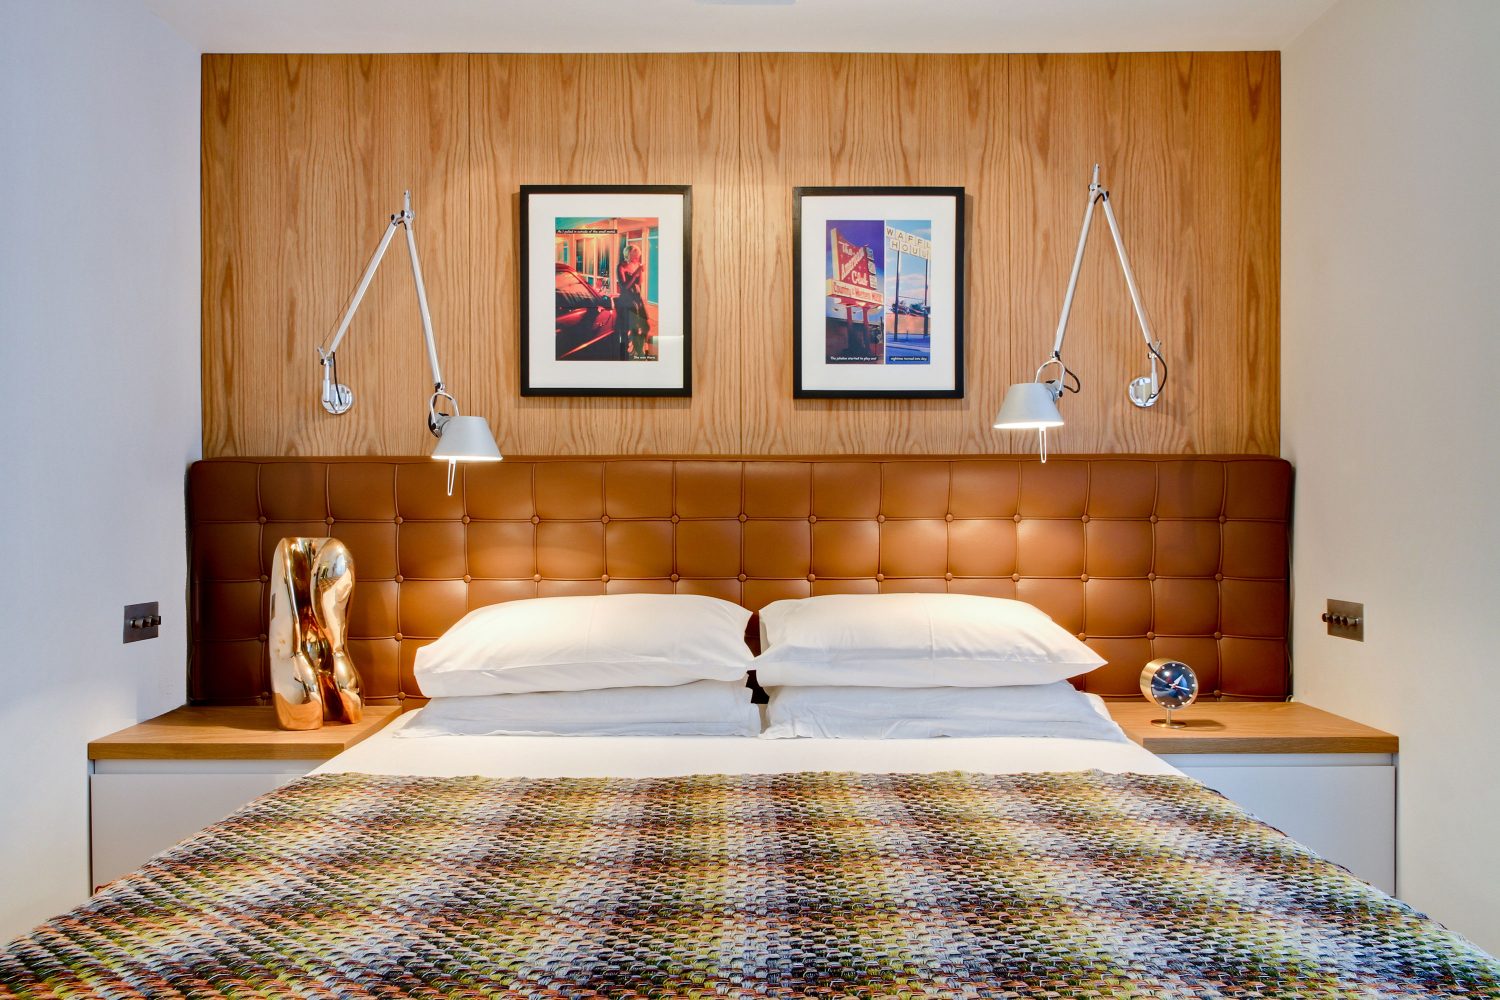 Design For Living by Daniel Hopwood - bedroom. Mayfair interiors